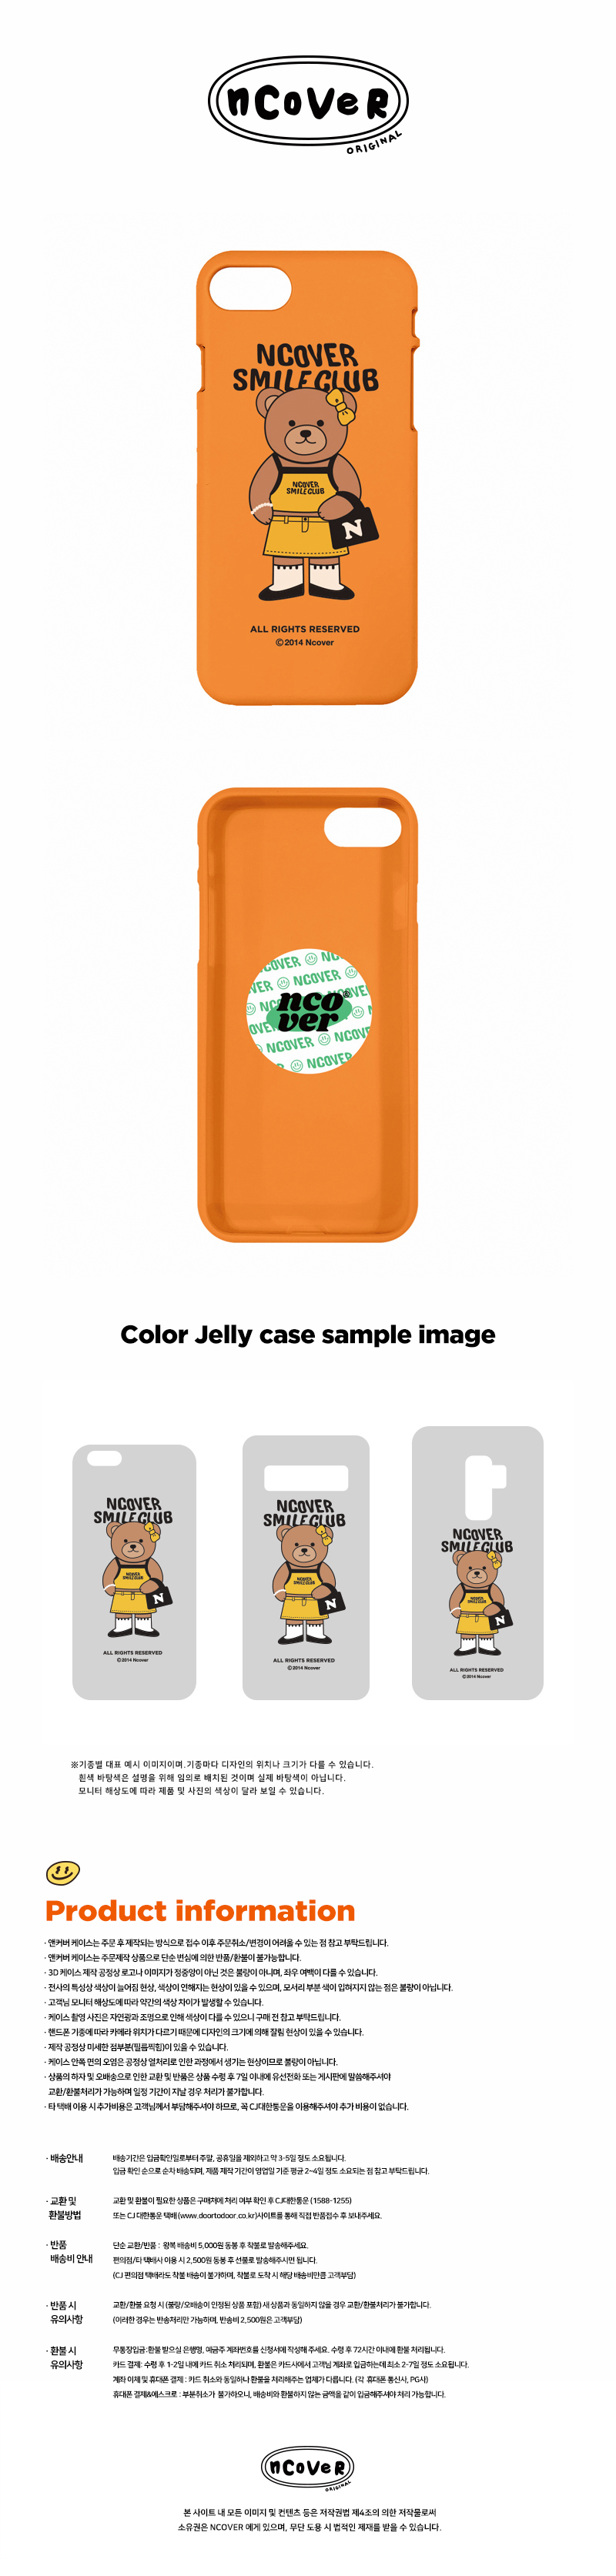  Handbag bruin-orange(color jelly)  19,000원 - 바이인터내셔널주식회사 디지털, 모바일 액세서리, 휴대폰 케이스, 기타 스마트폰 바보사랑  Handbag bruin-orange(color jelly)  19,000원 - 바이인터내셔널주식회사 디지털, 모바일 액세서리, 휴대폰 케이스, 기타 스마트폰 바보사랑